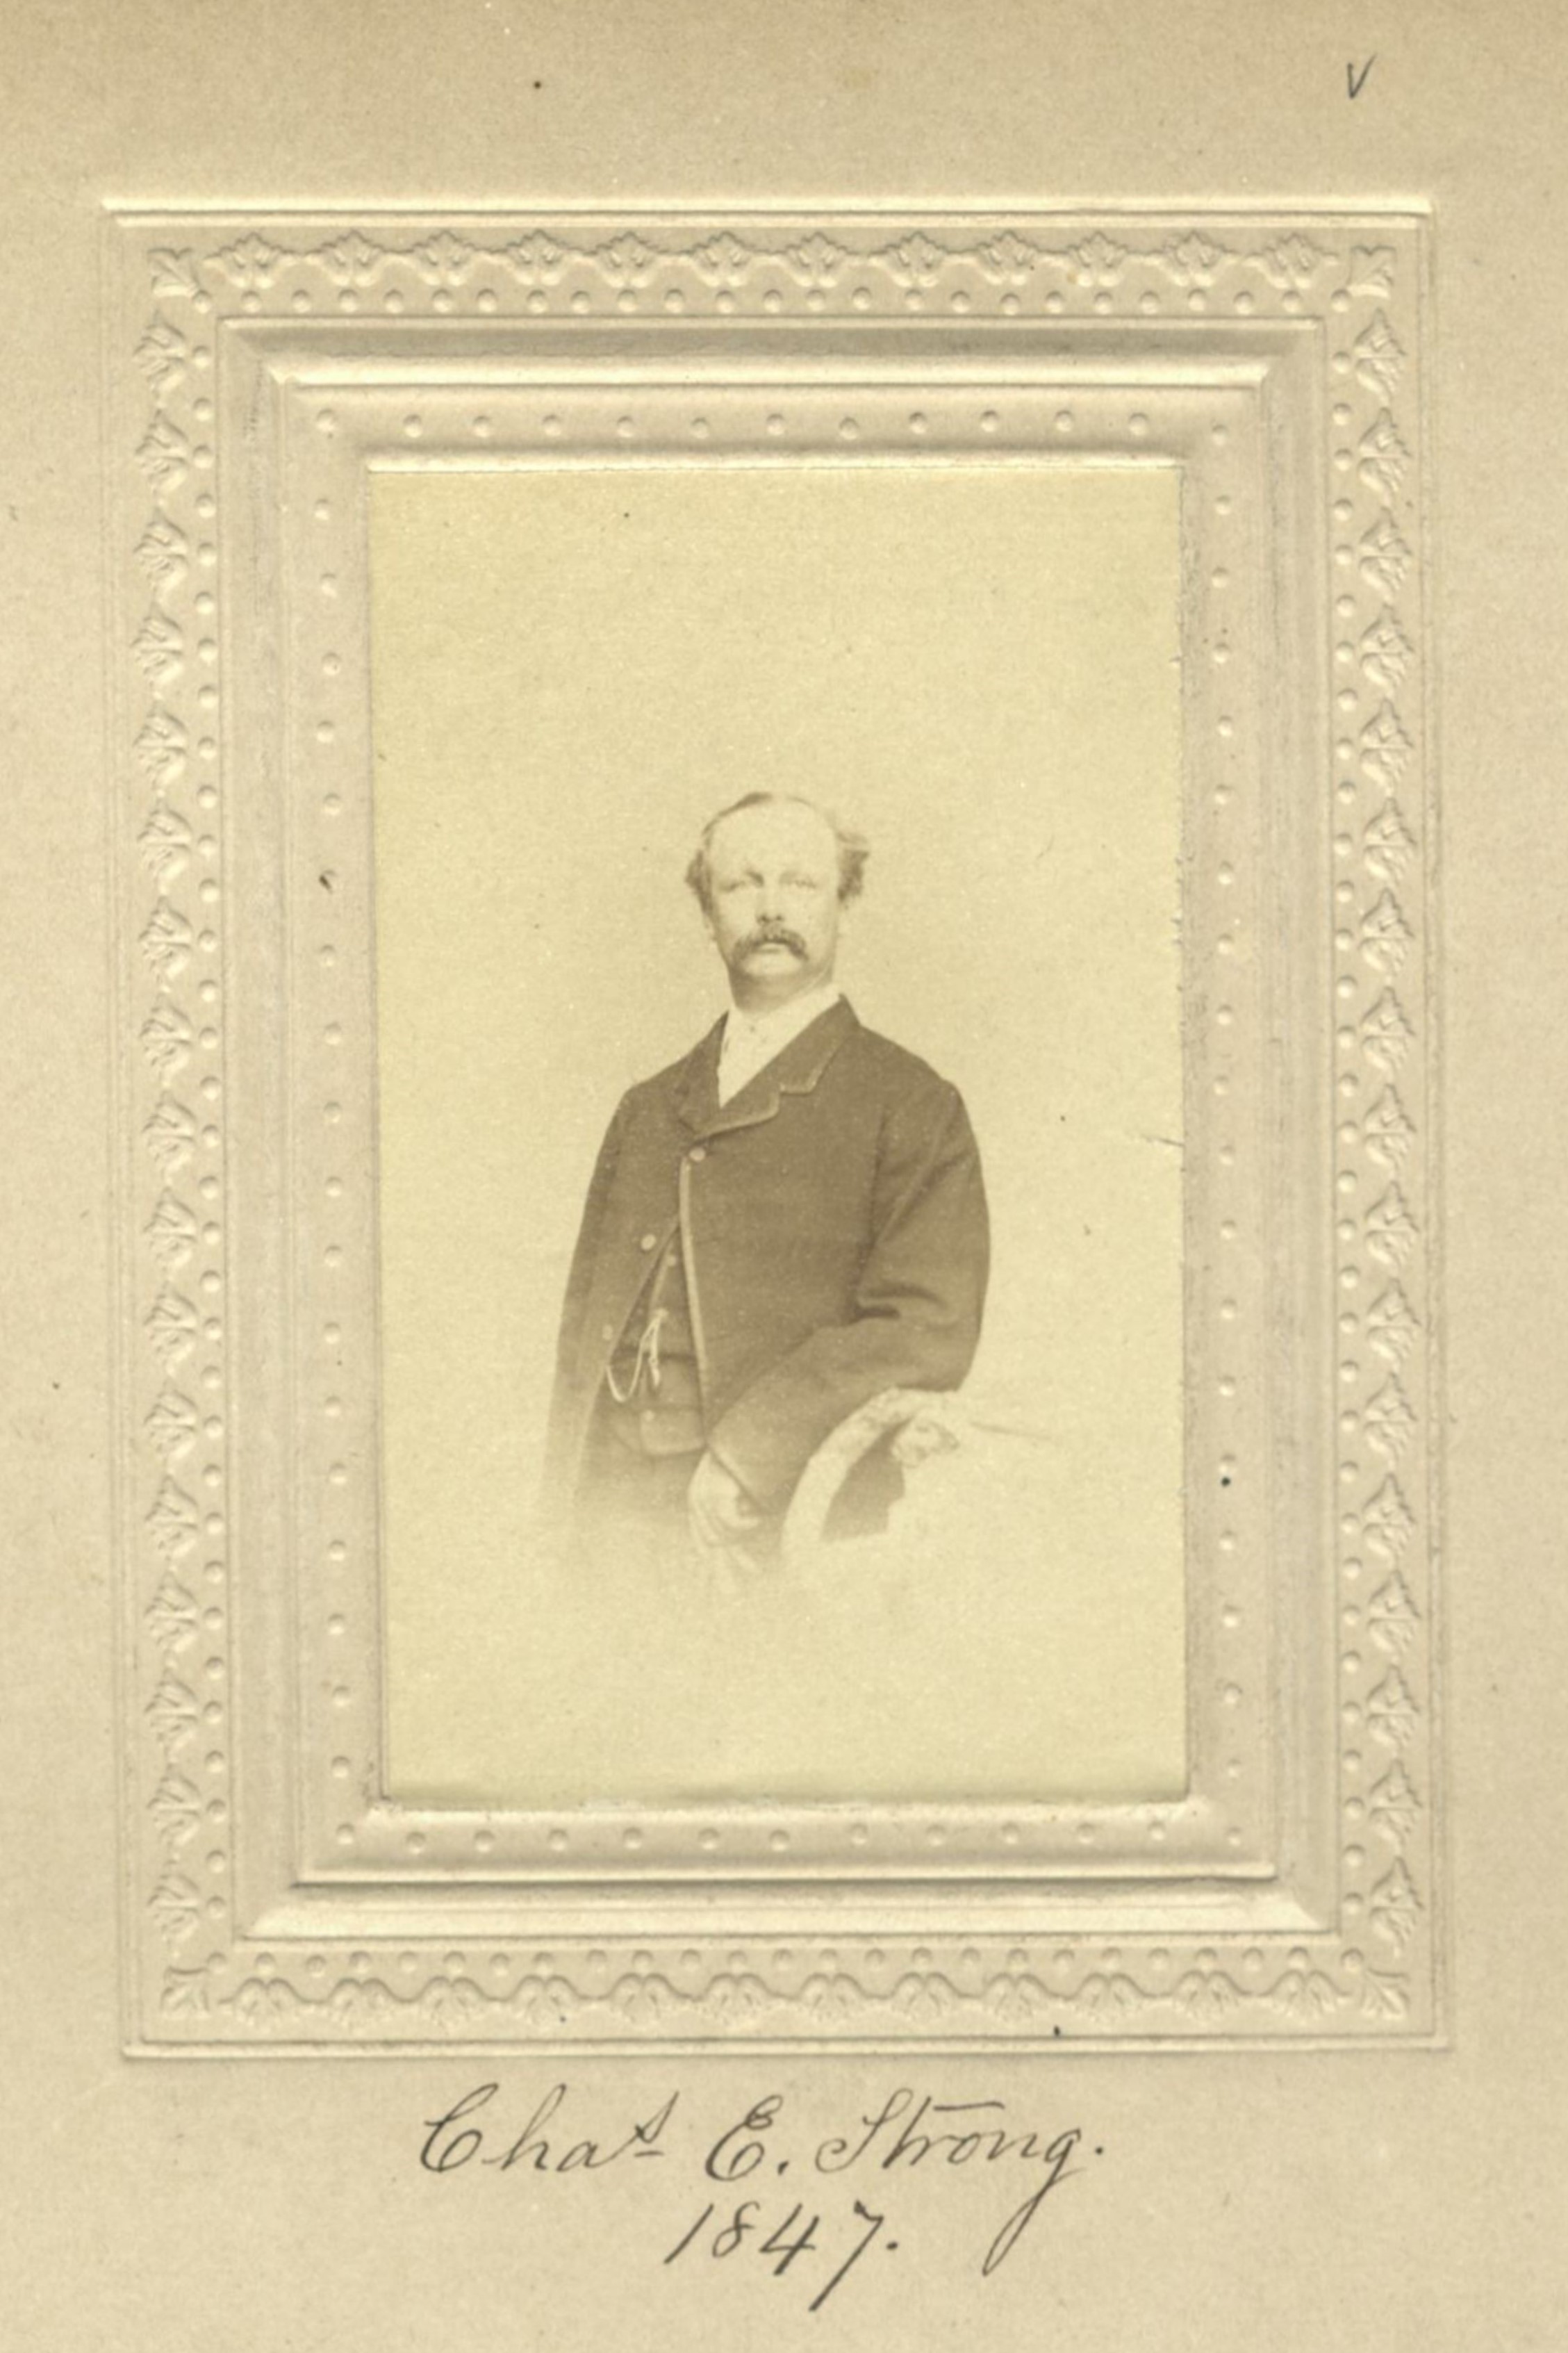 Member portrait of Charles E. Strong